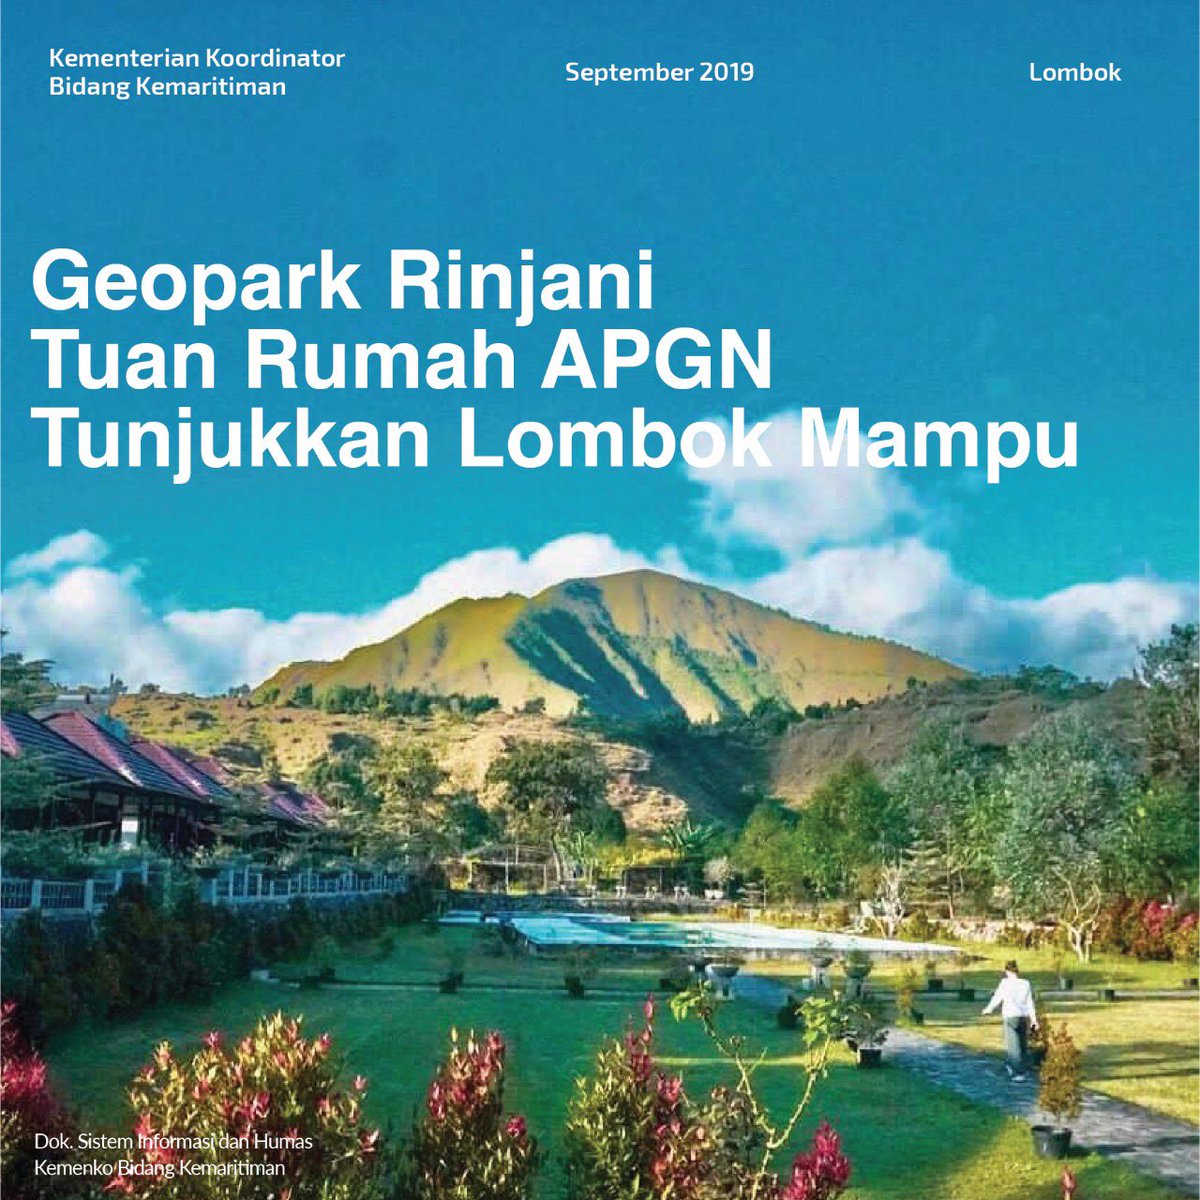 Lombok ku Hebat! Ayo rame-rame ke Geopark Rinjani
⛰
#maritim #geopark #tamannasional #rinjani #lombok